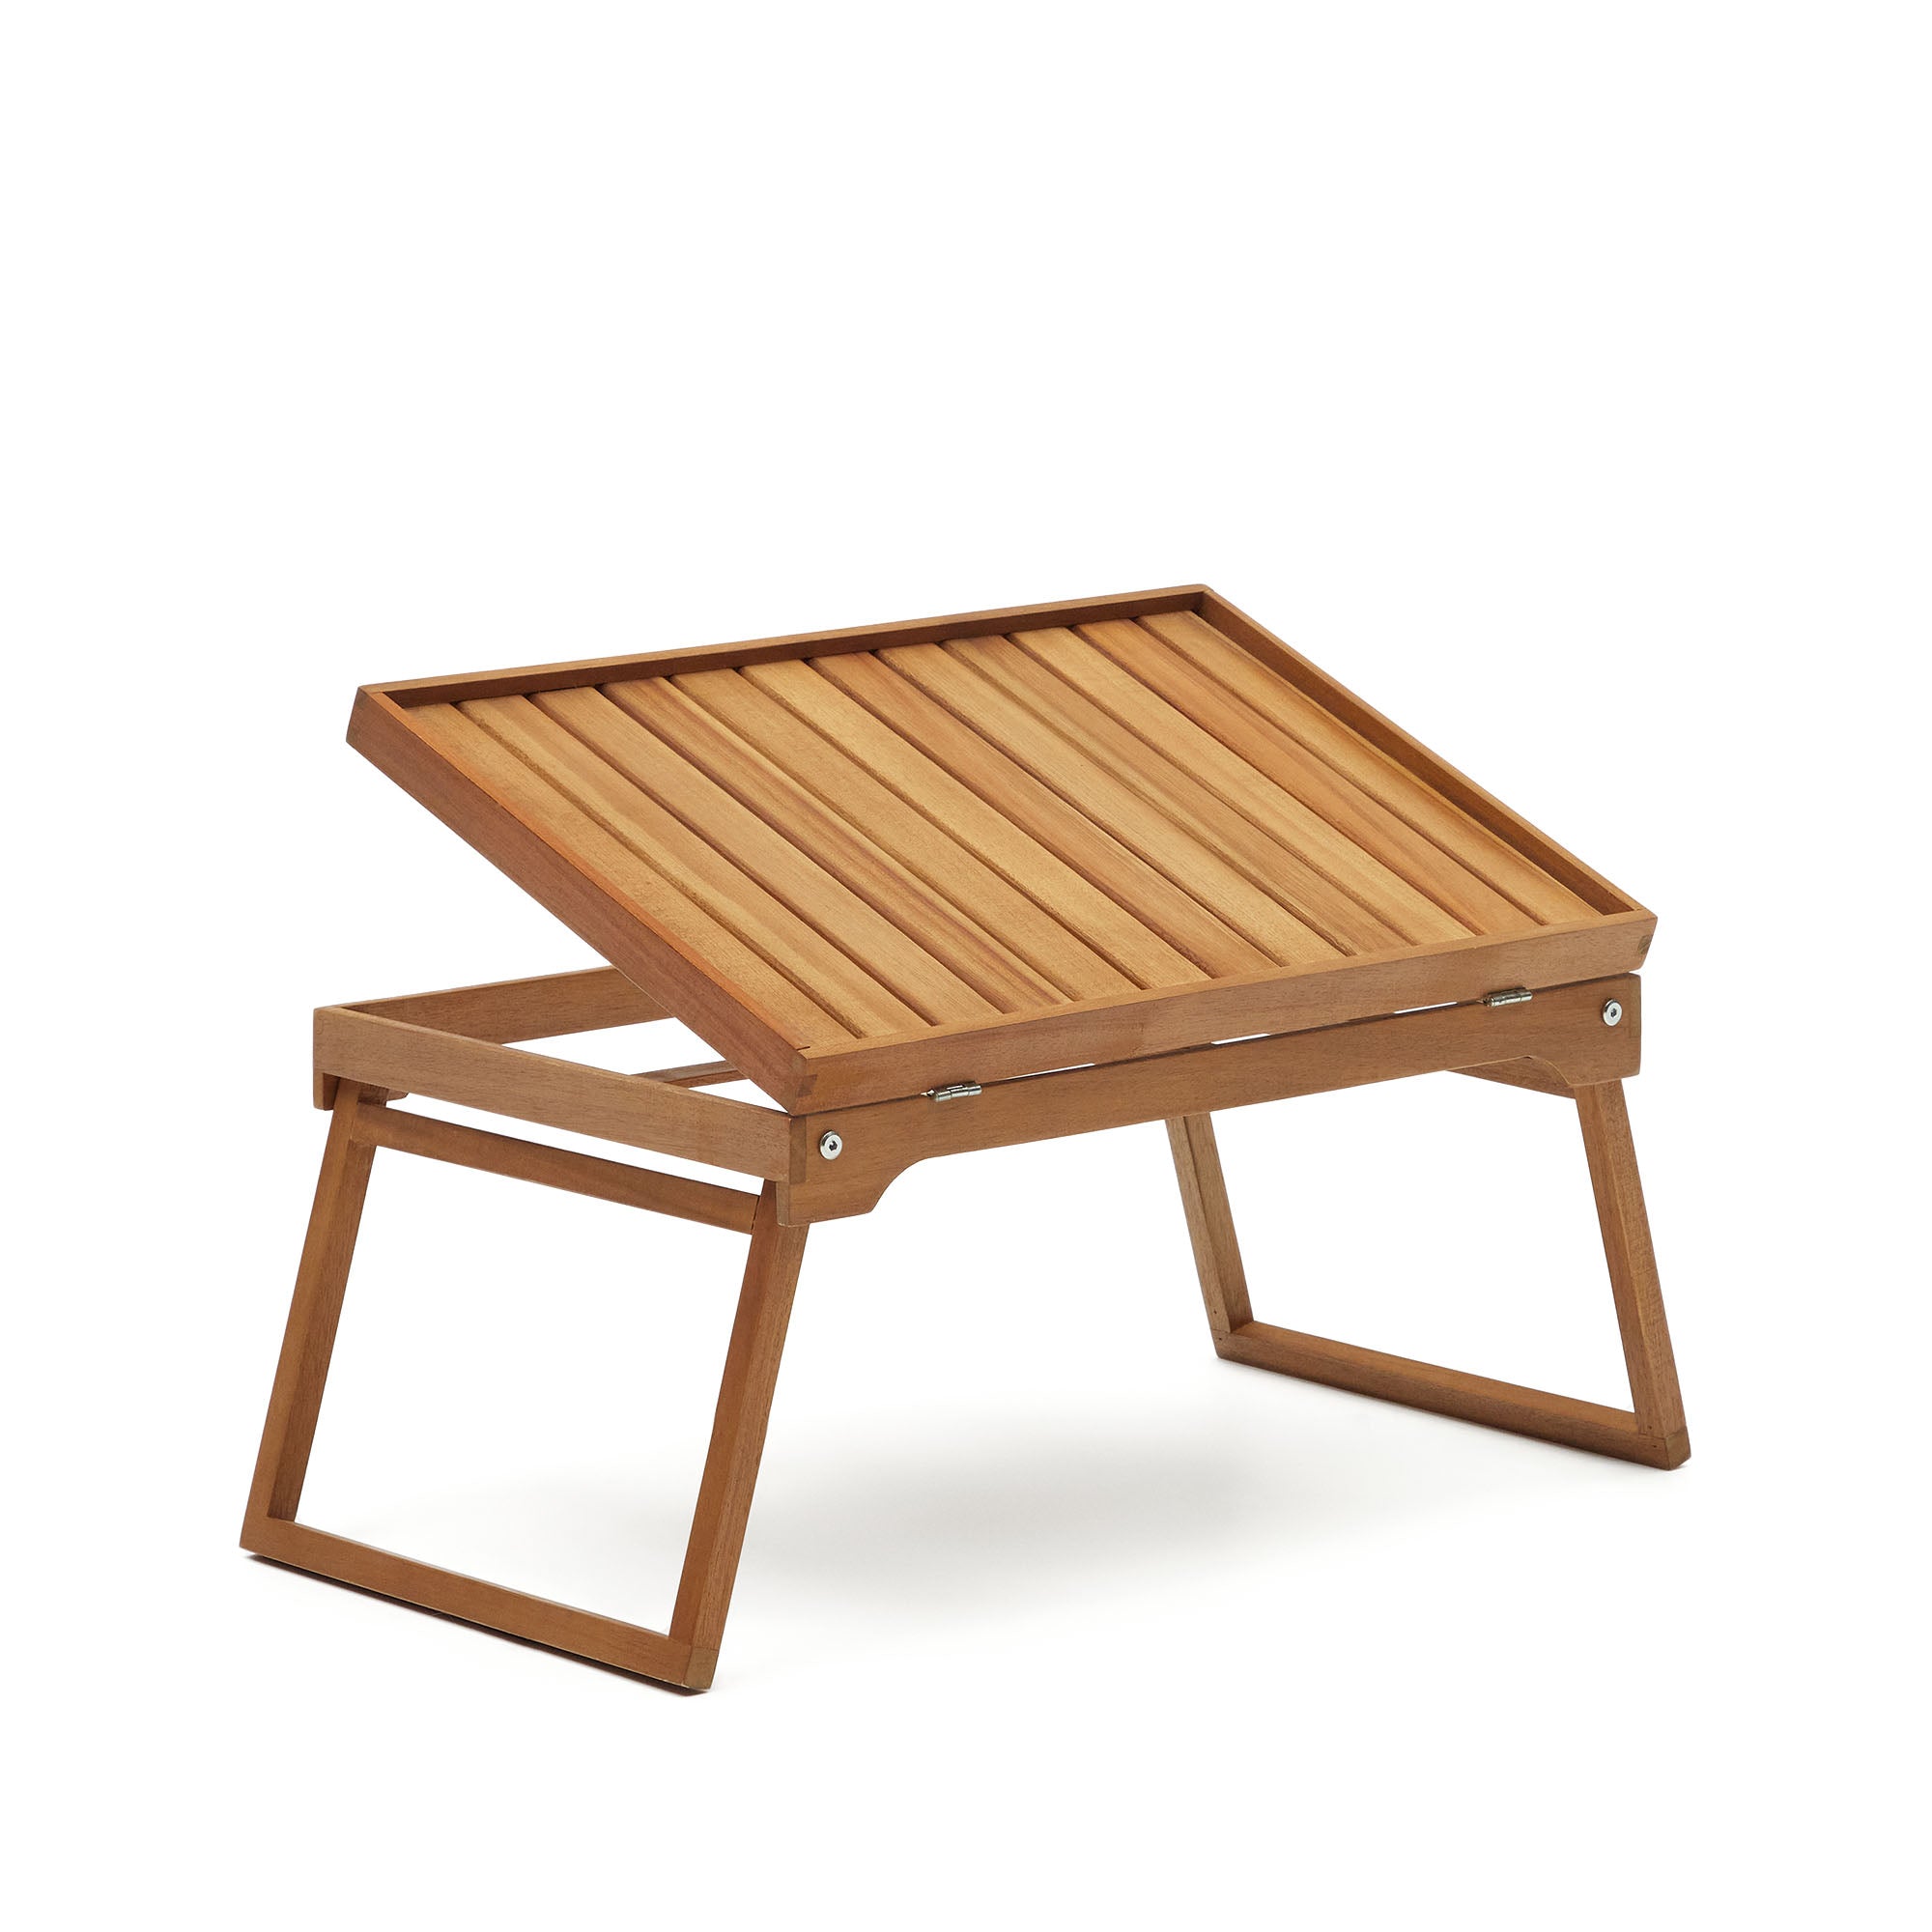 Mani folding tray made from solid acacia wood